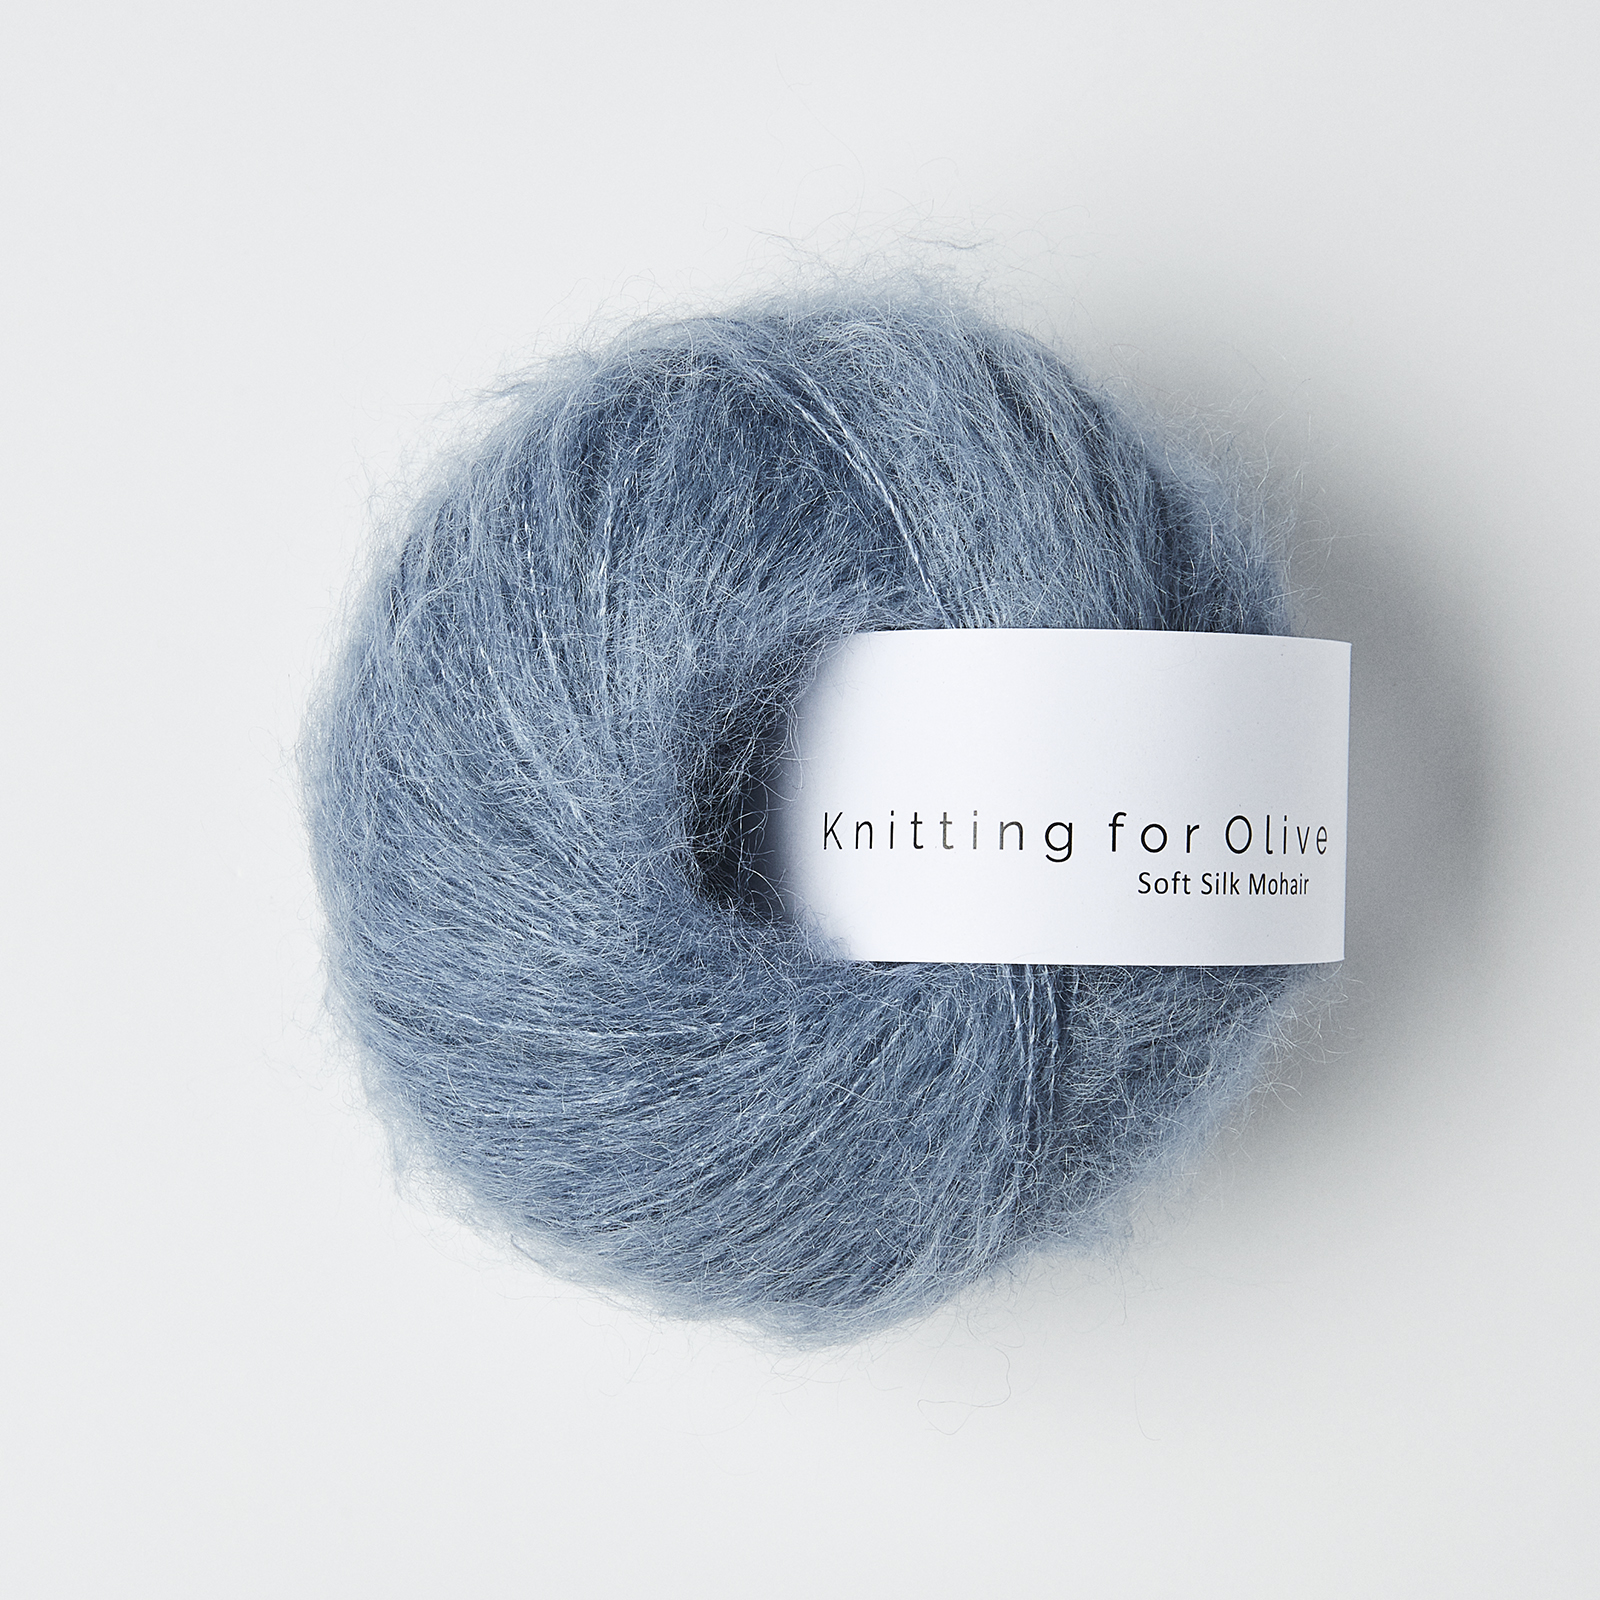 soft silk mohair knitting for olive | soft silk mohair: dusty dove blue